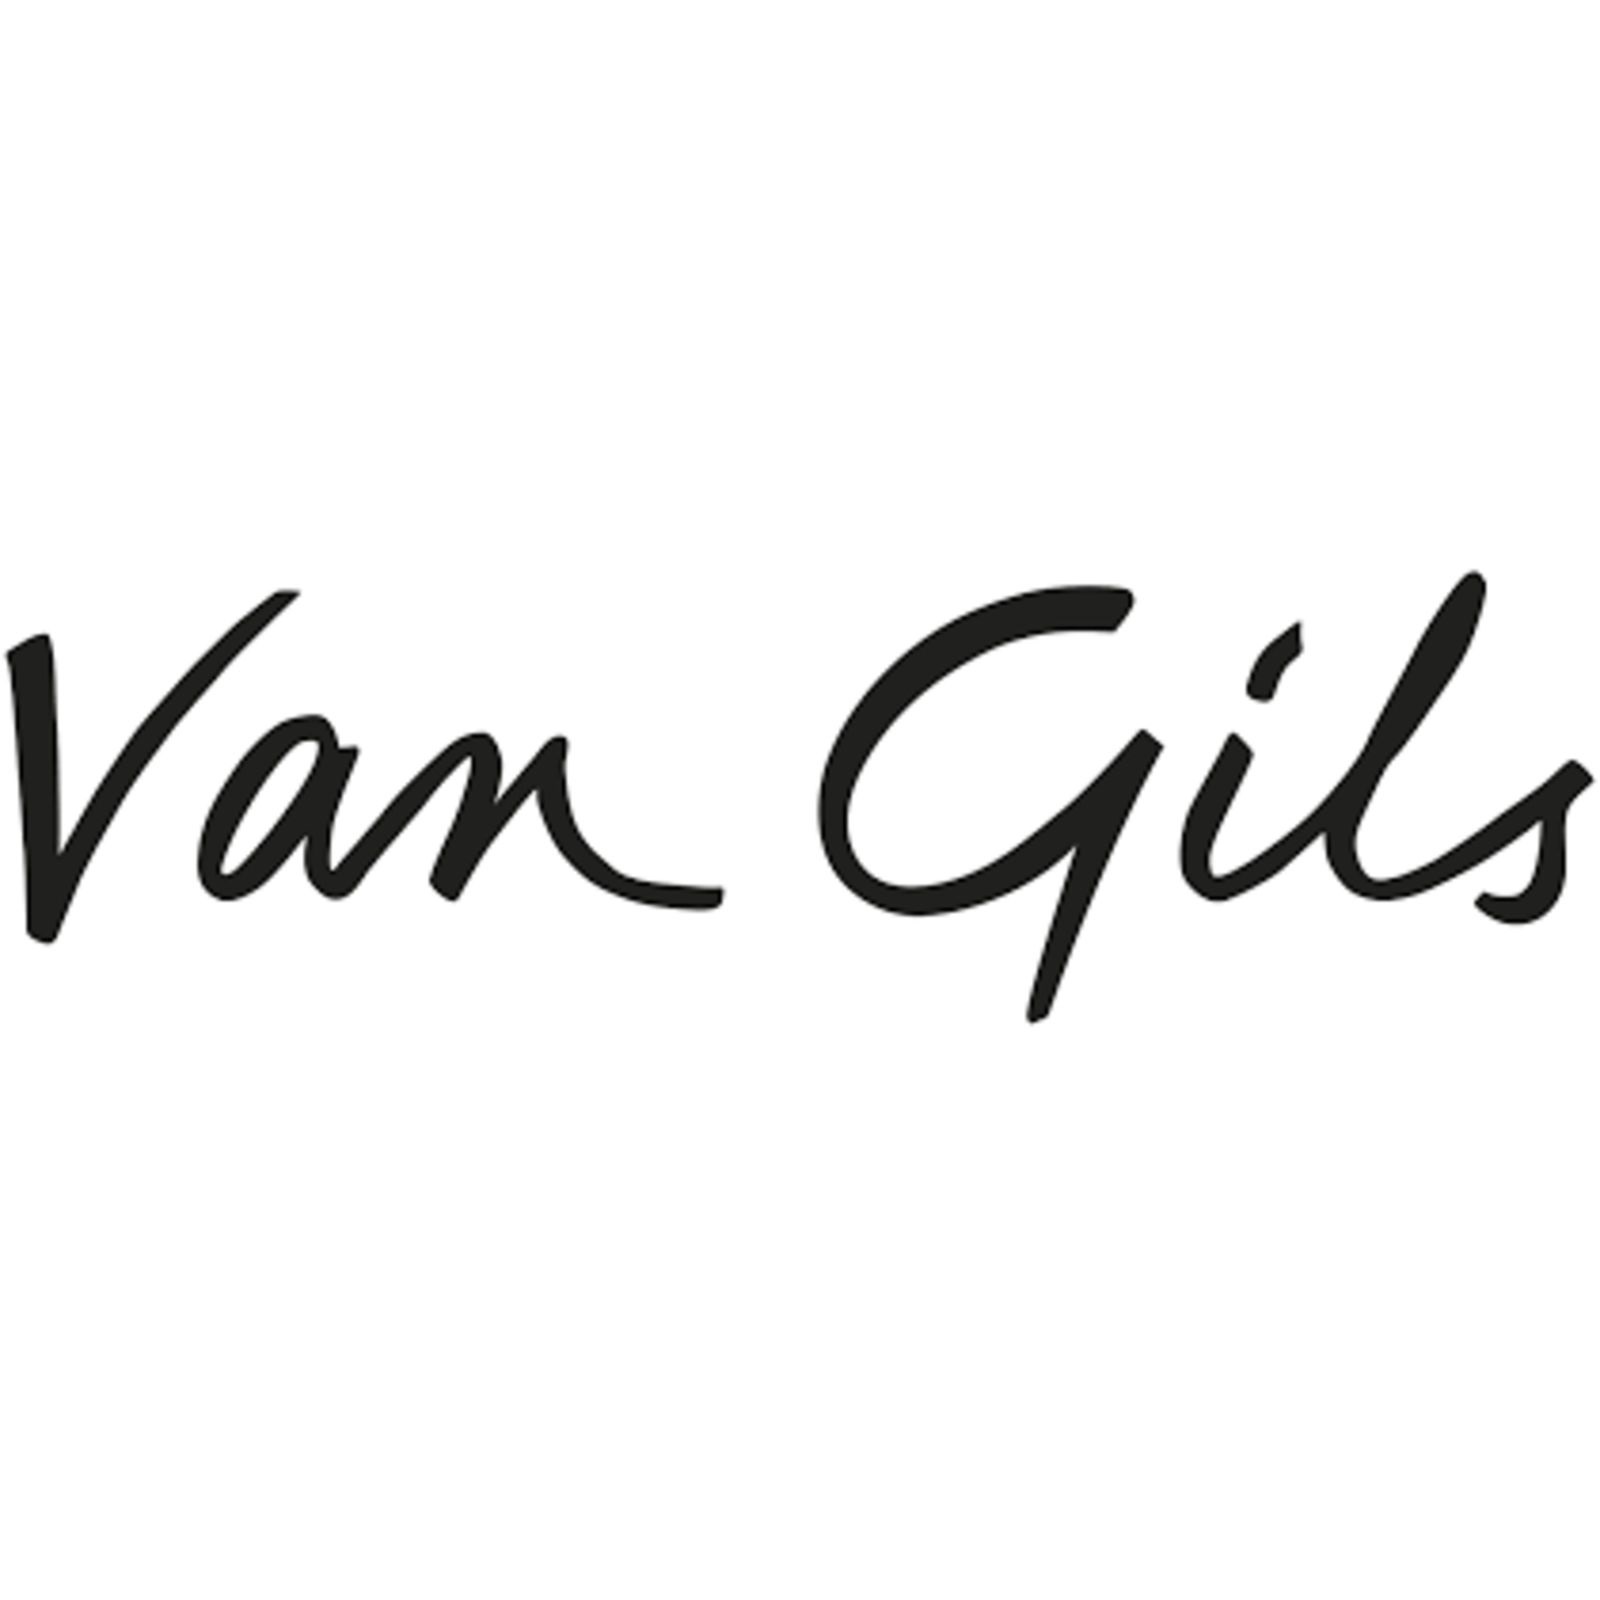 Van Gils Parfums